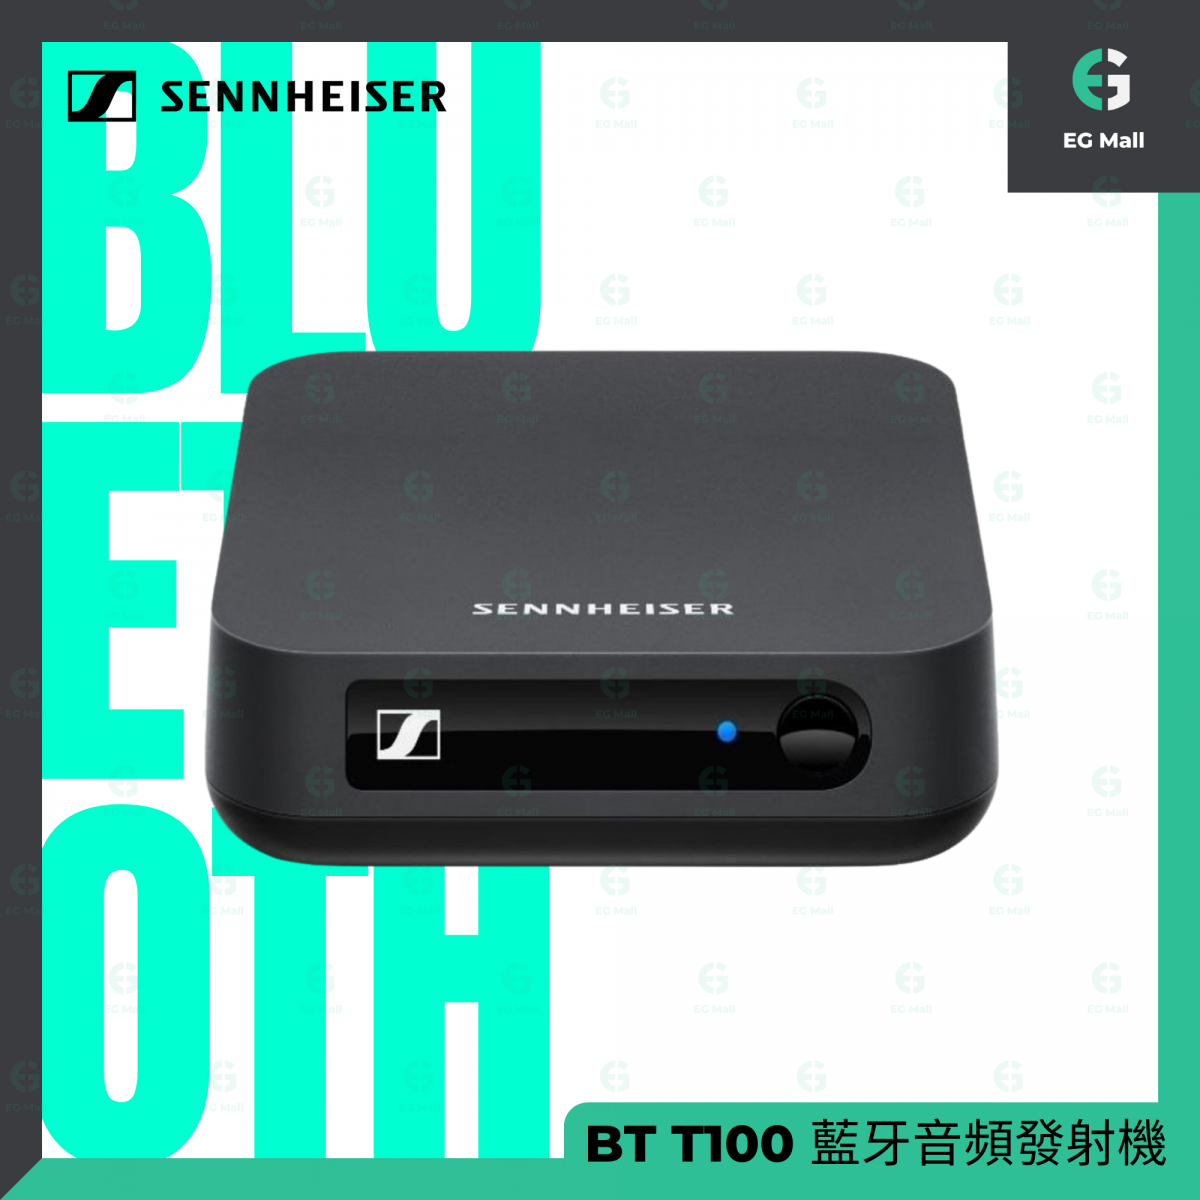 BT T100 Bluetooth® Audio Transmitter – Sennheiser